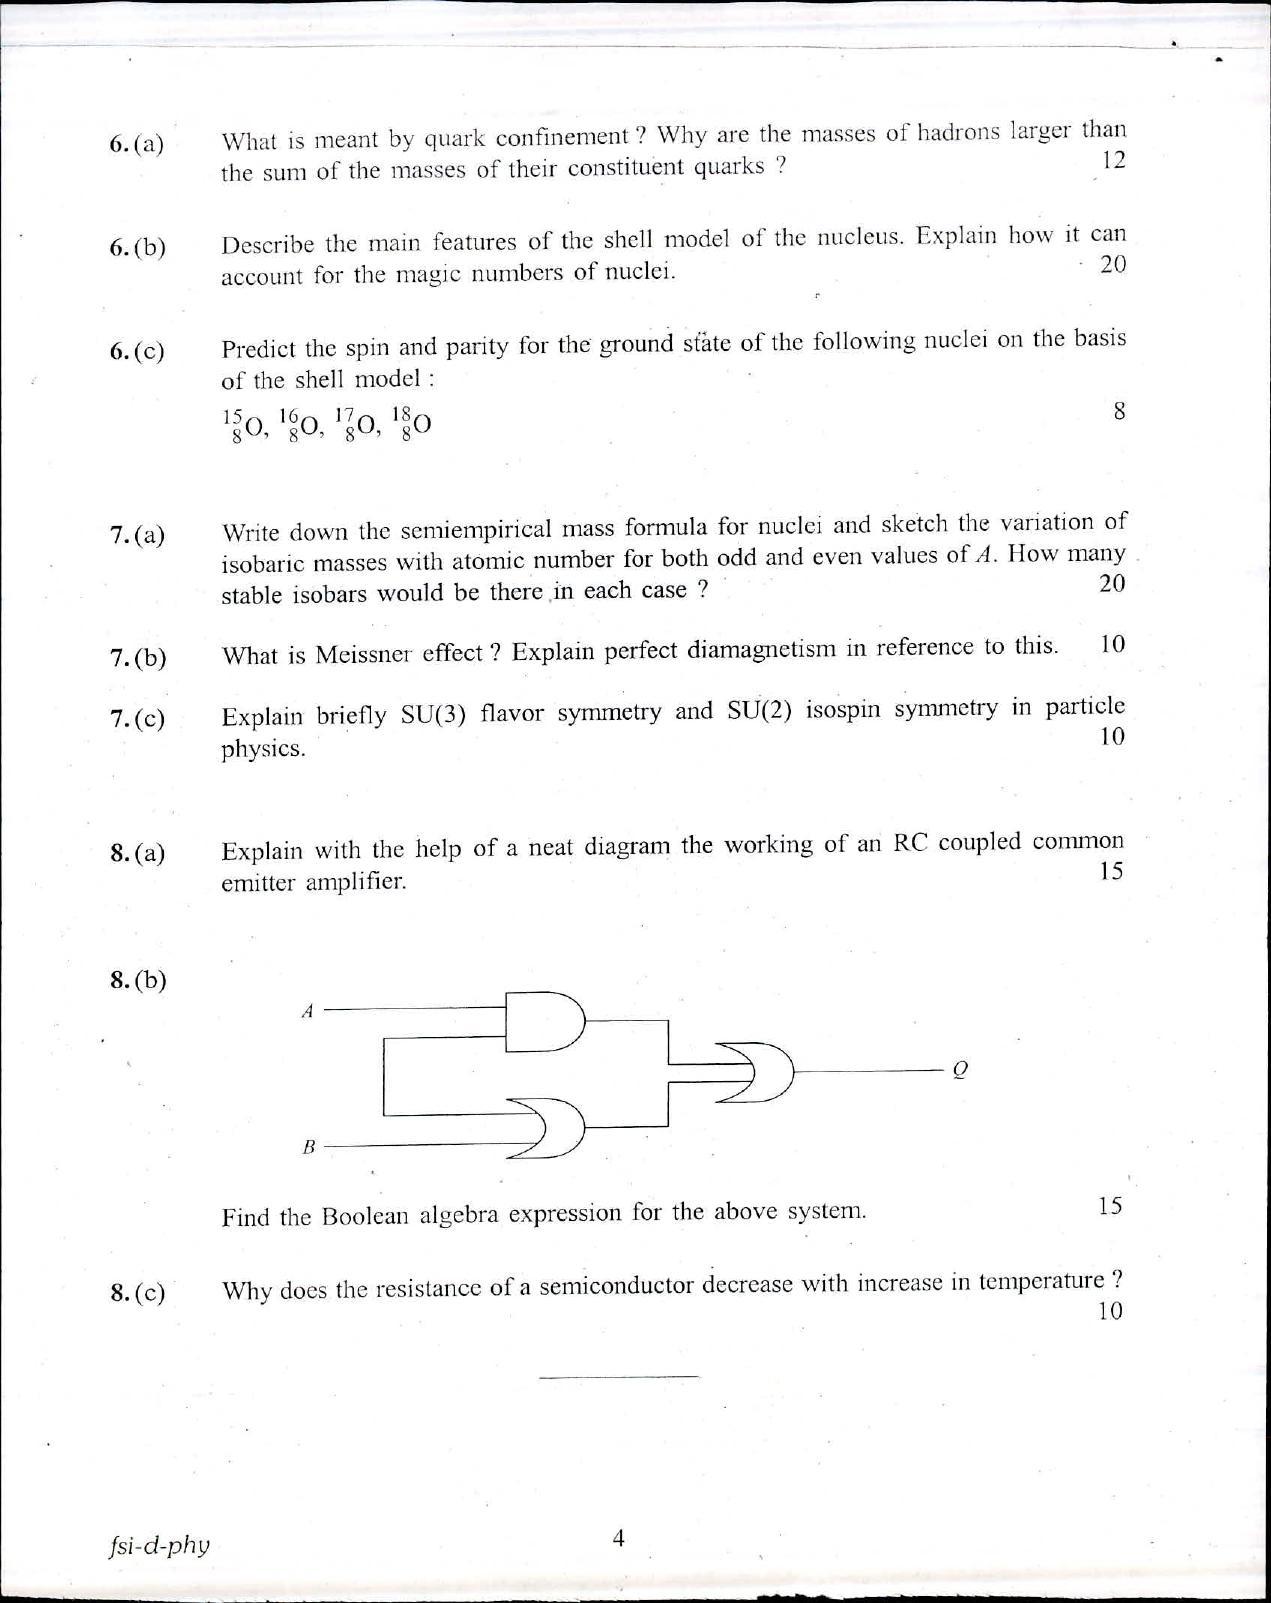 SGRDUHS 2017 B.Sc Nursing Physics IFS Main Question Papers - Page 4